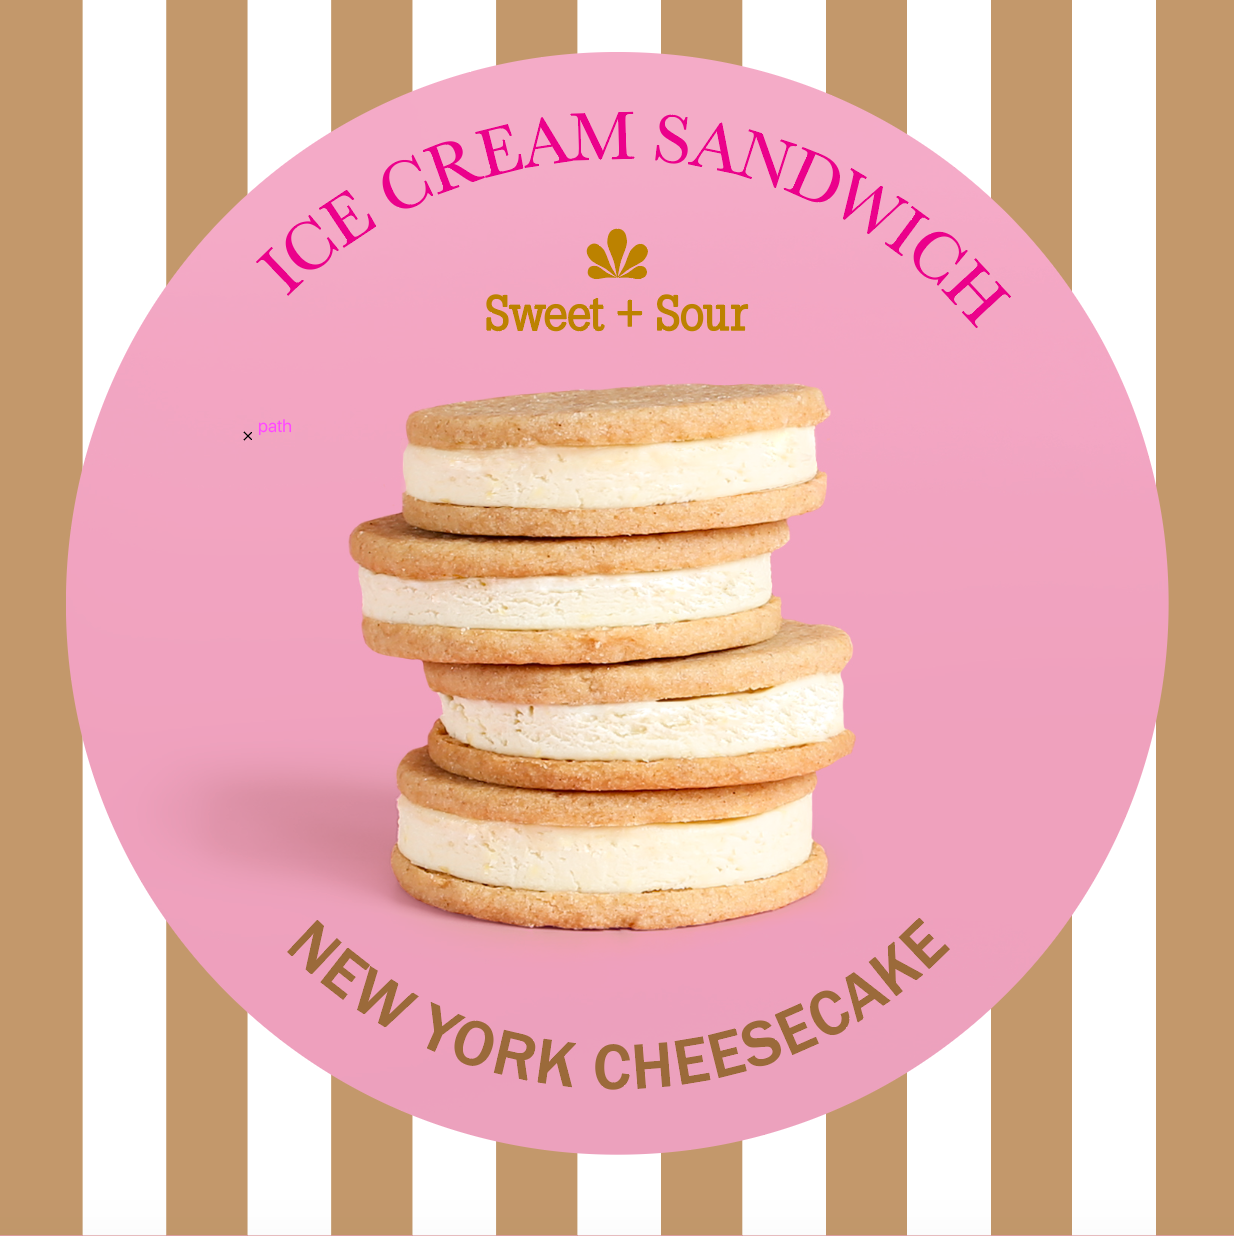  Ice cream sandwich_ NY cheesecake 